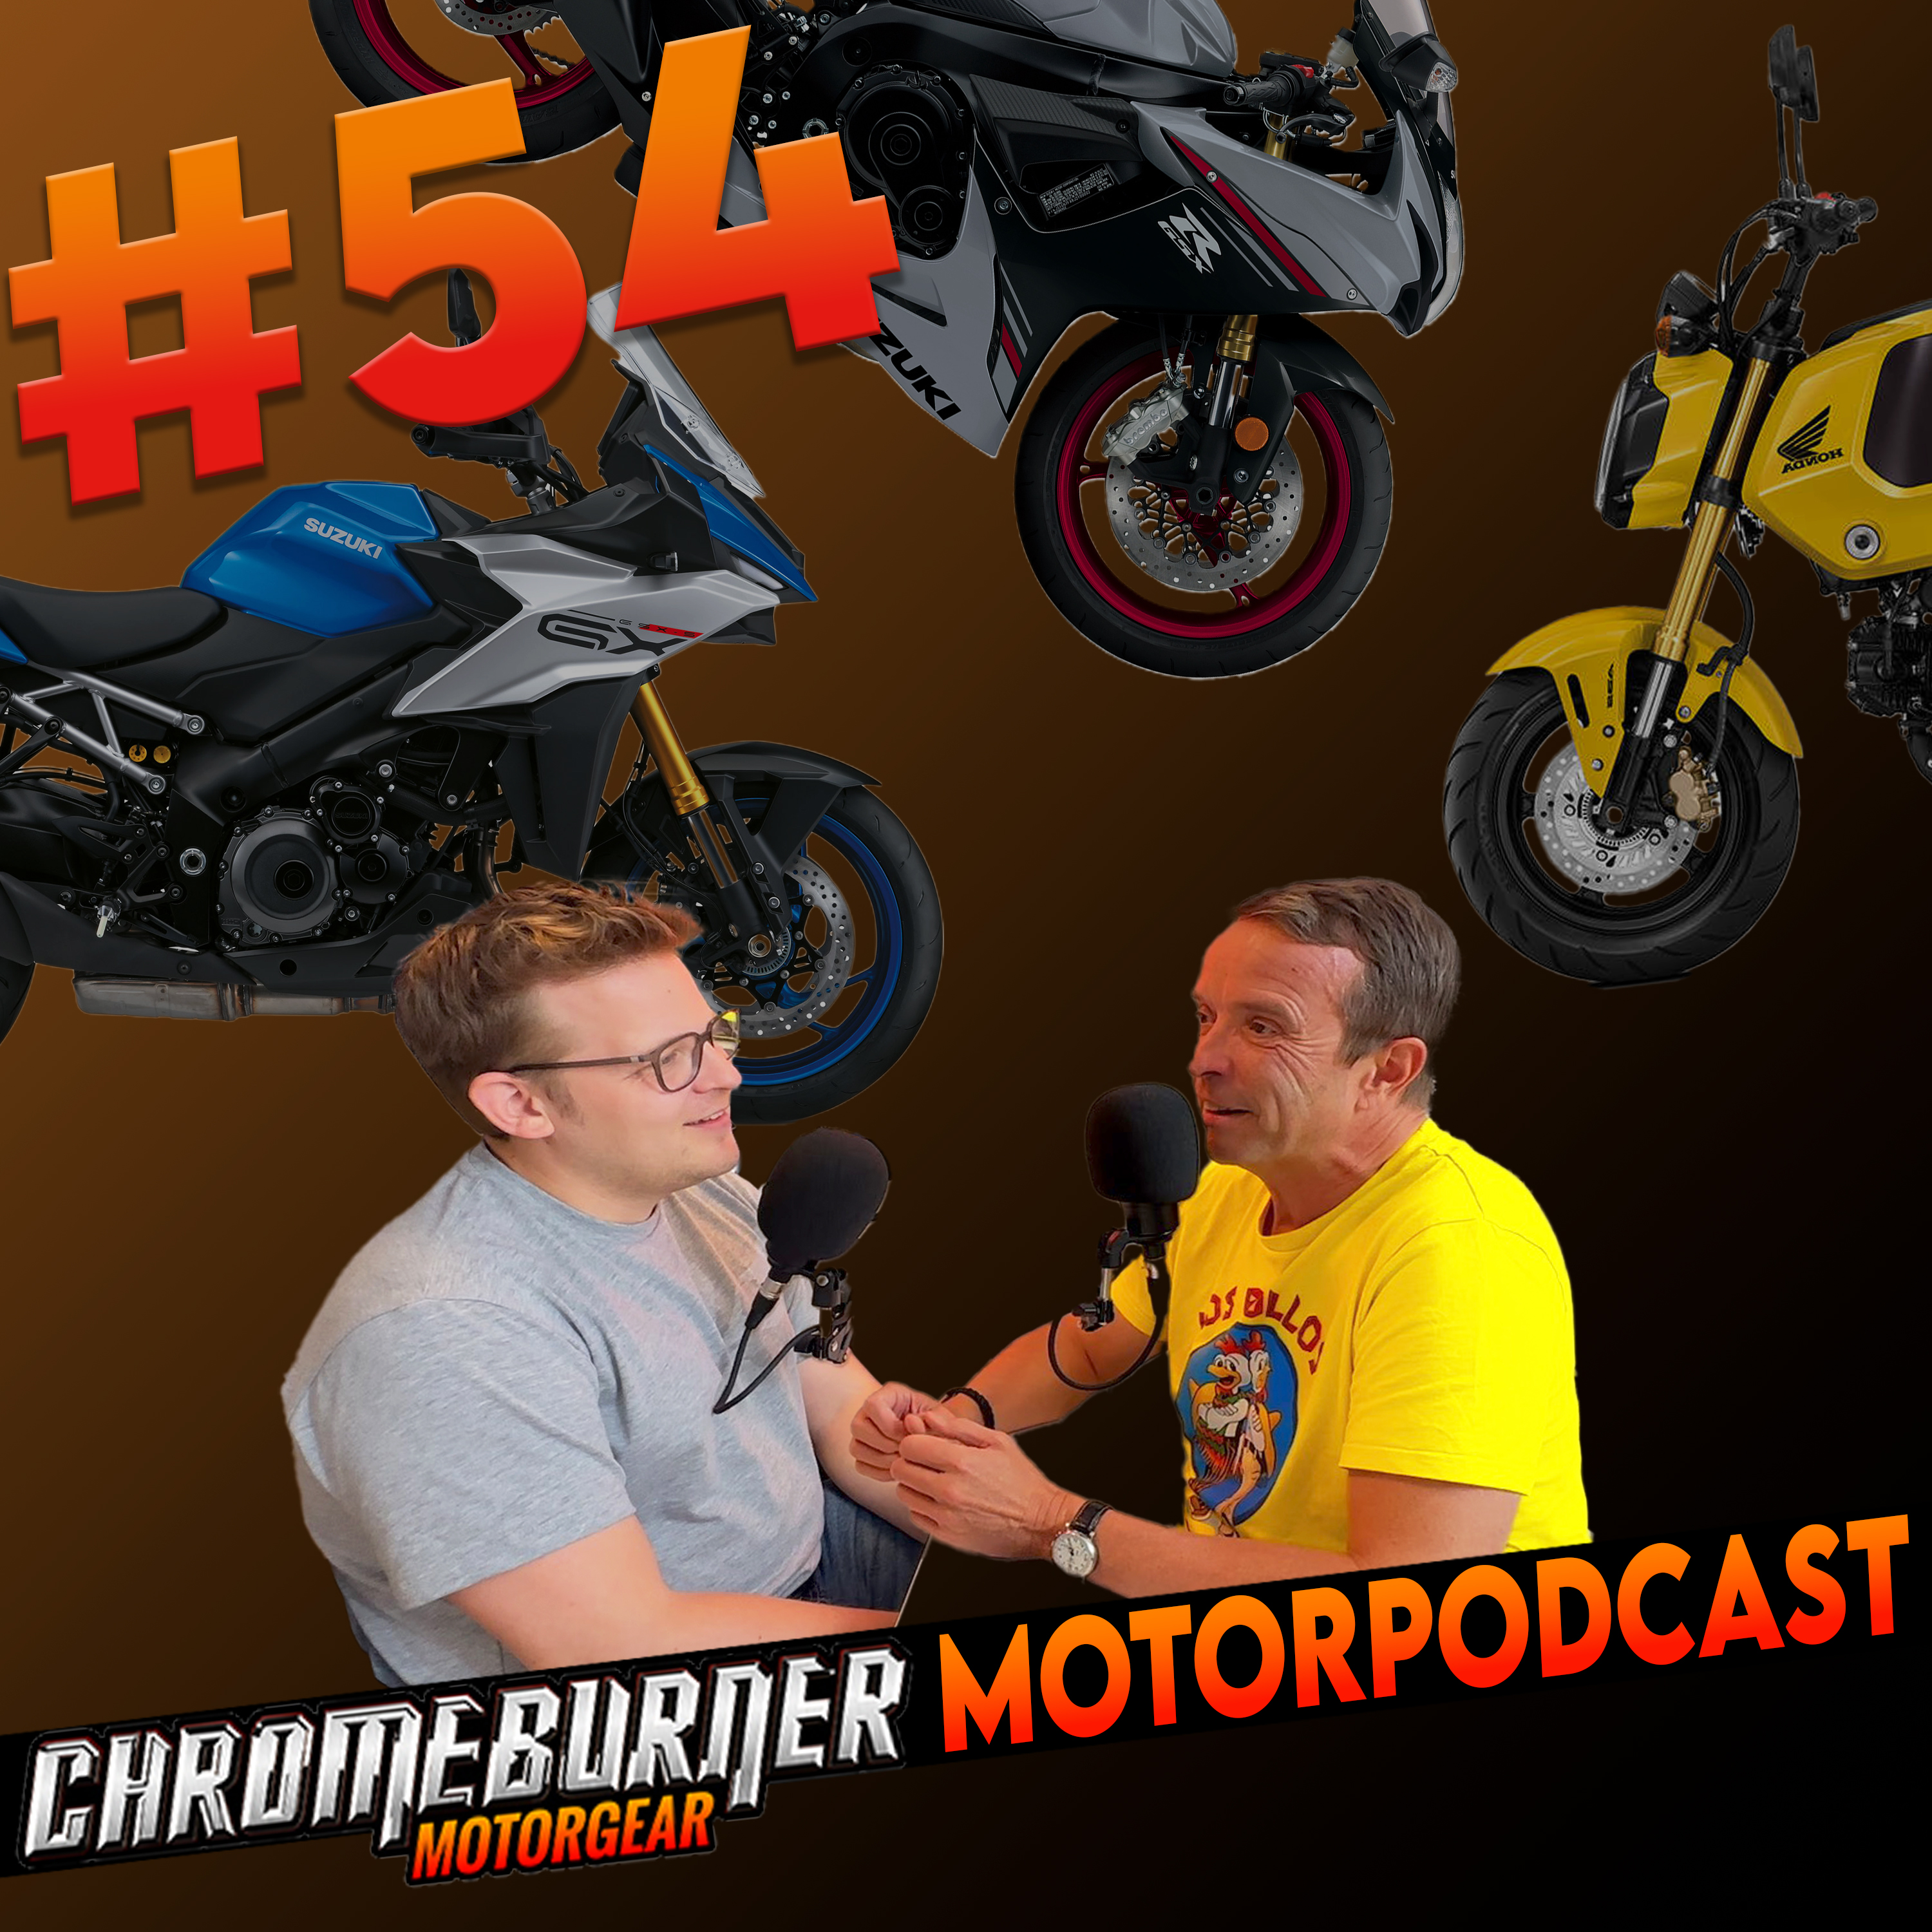 ChromeBurner MotorPodcast #54: Slechte motoren bestaan nog steeds!